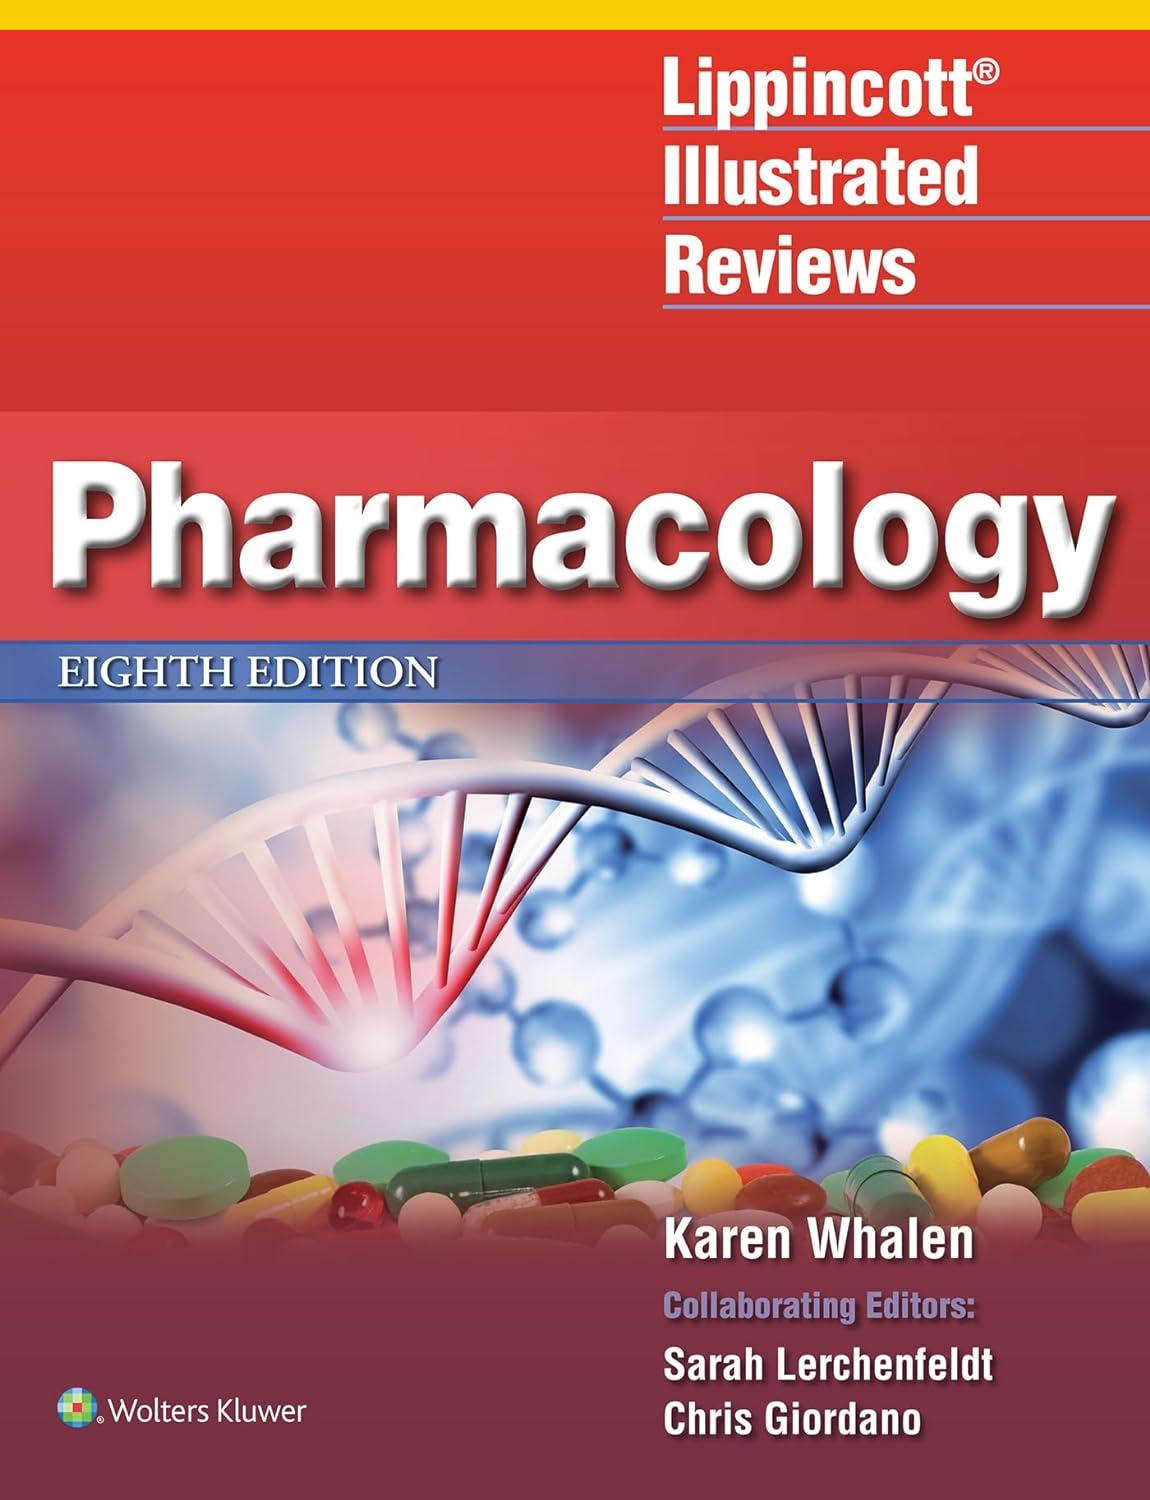 lippincott illustrated reviews pharmacology 8th edition karen whalen 1975170555, 978-1975170554